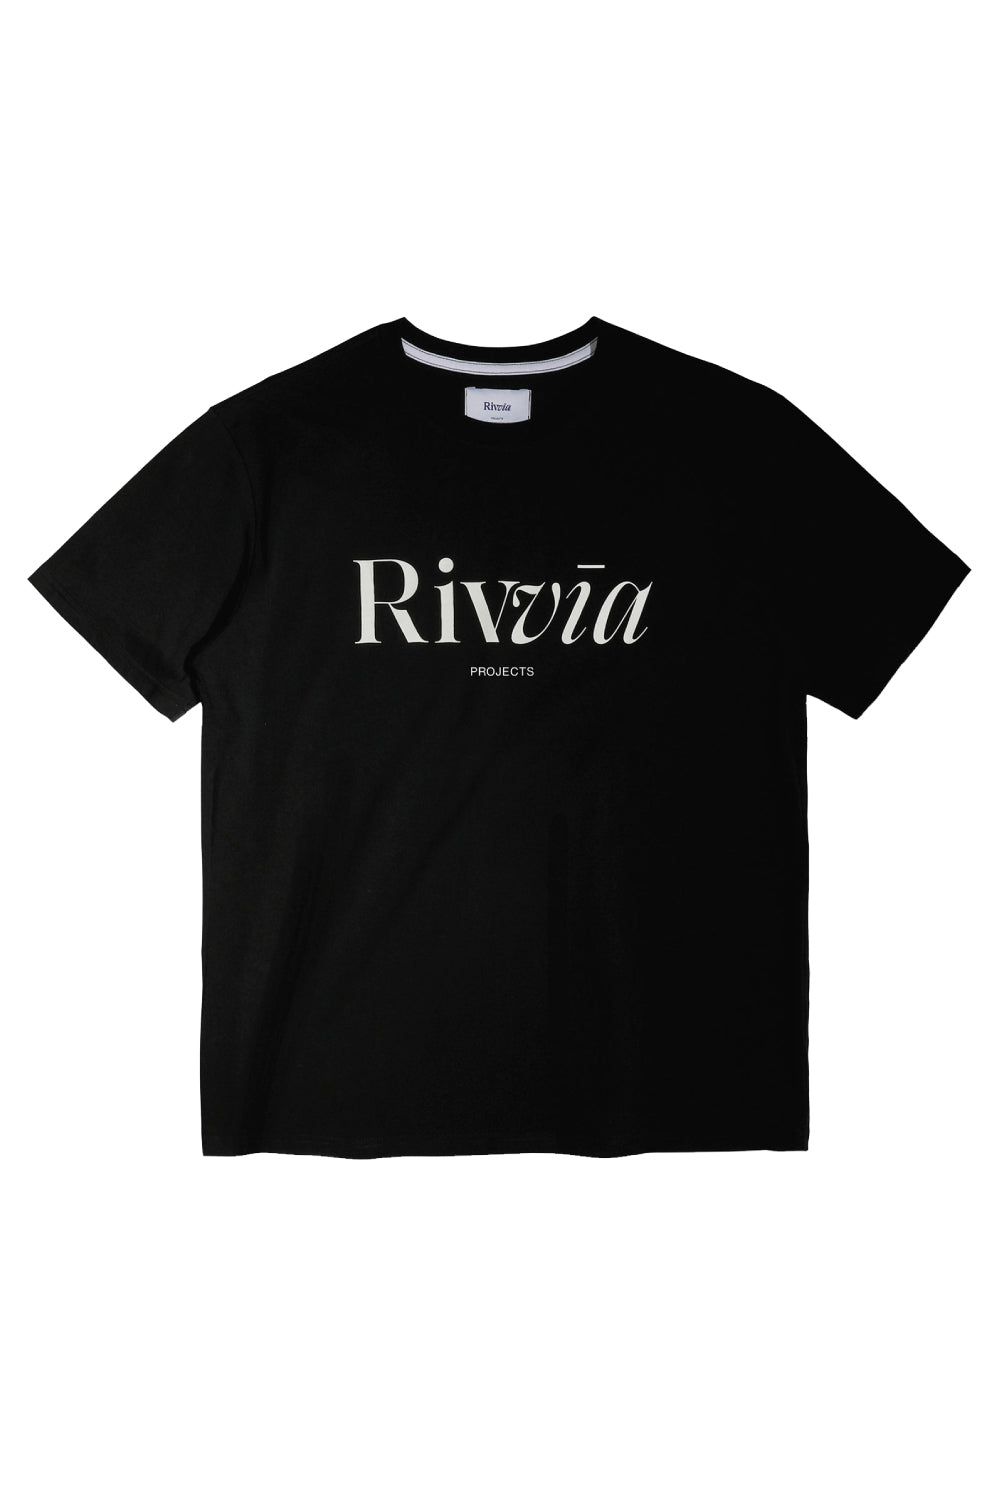 Rivvia Projects Reason T-shirt